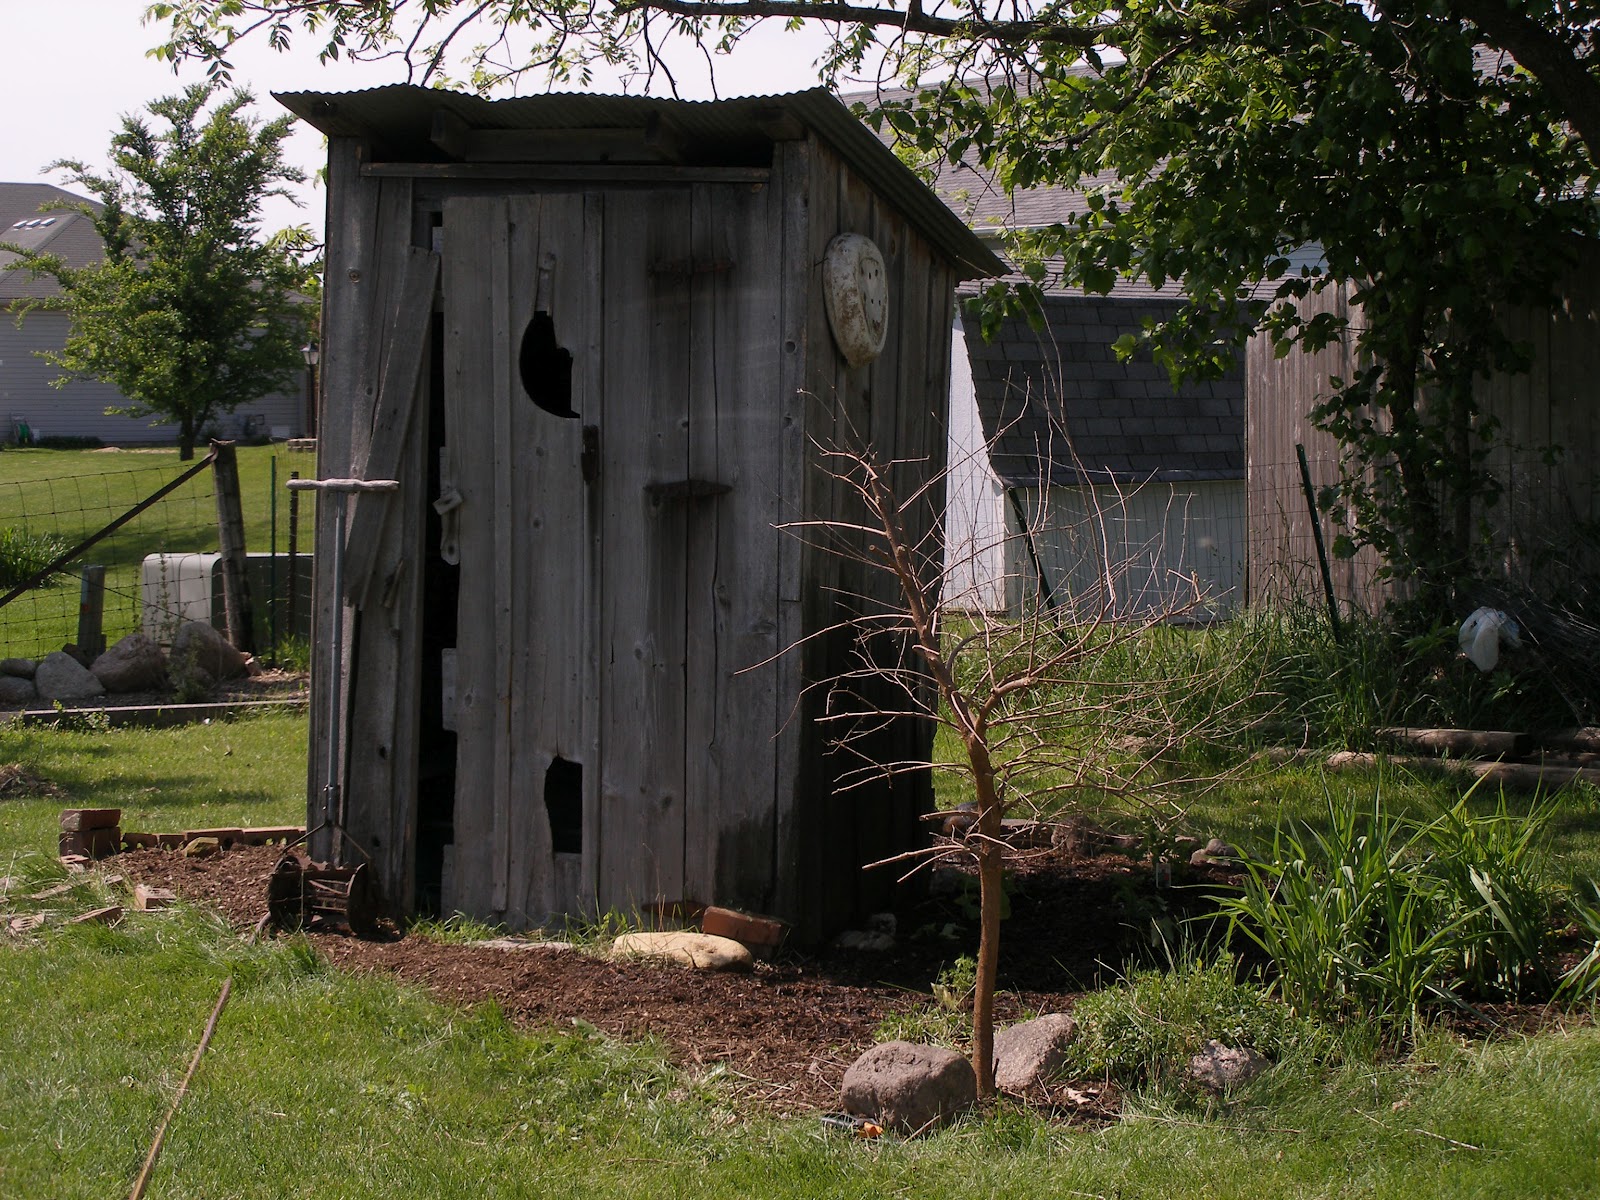 The Stone House Primitives: The Outhouse Garden